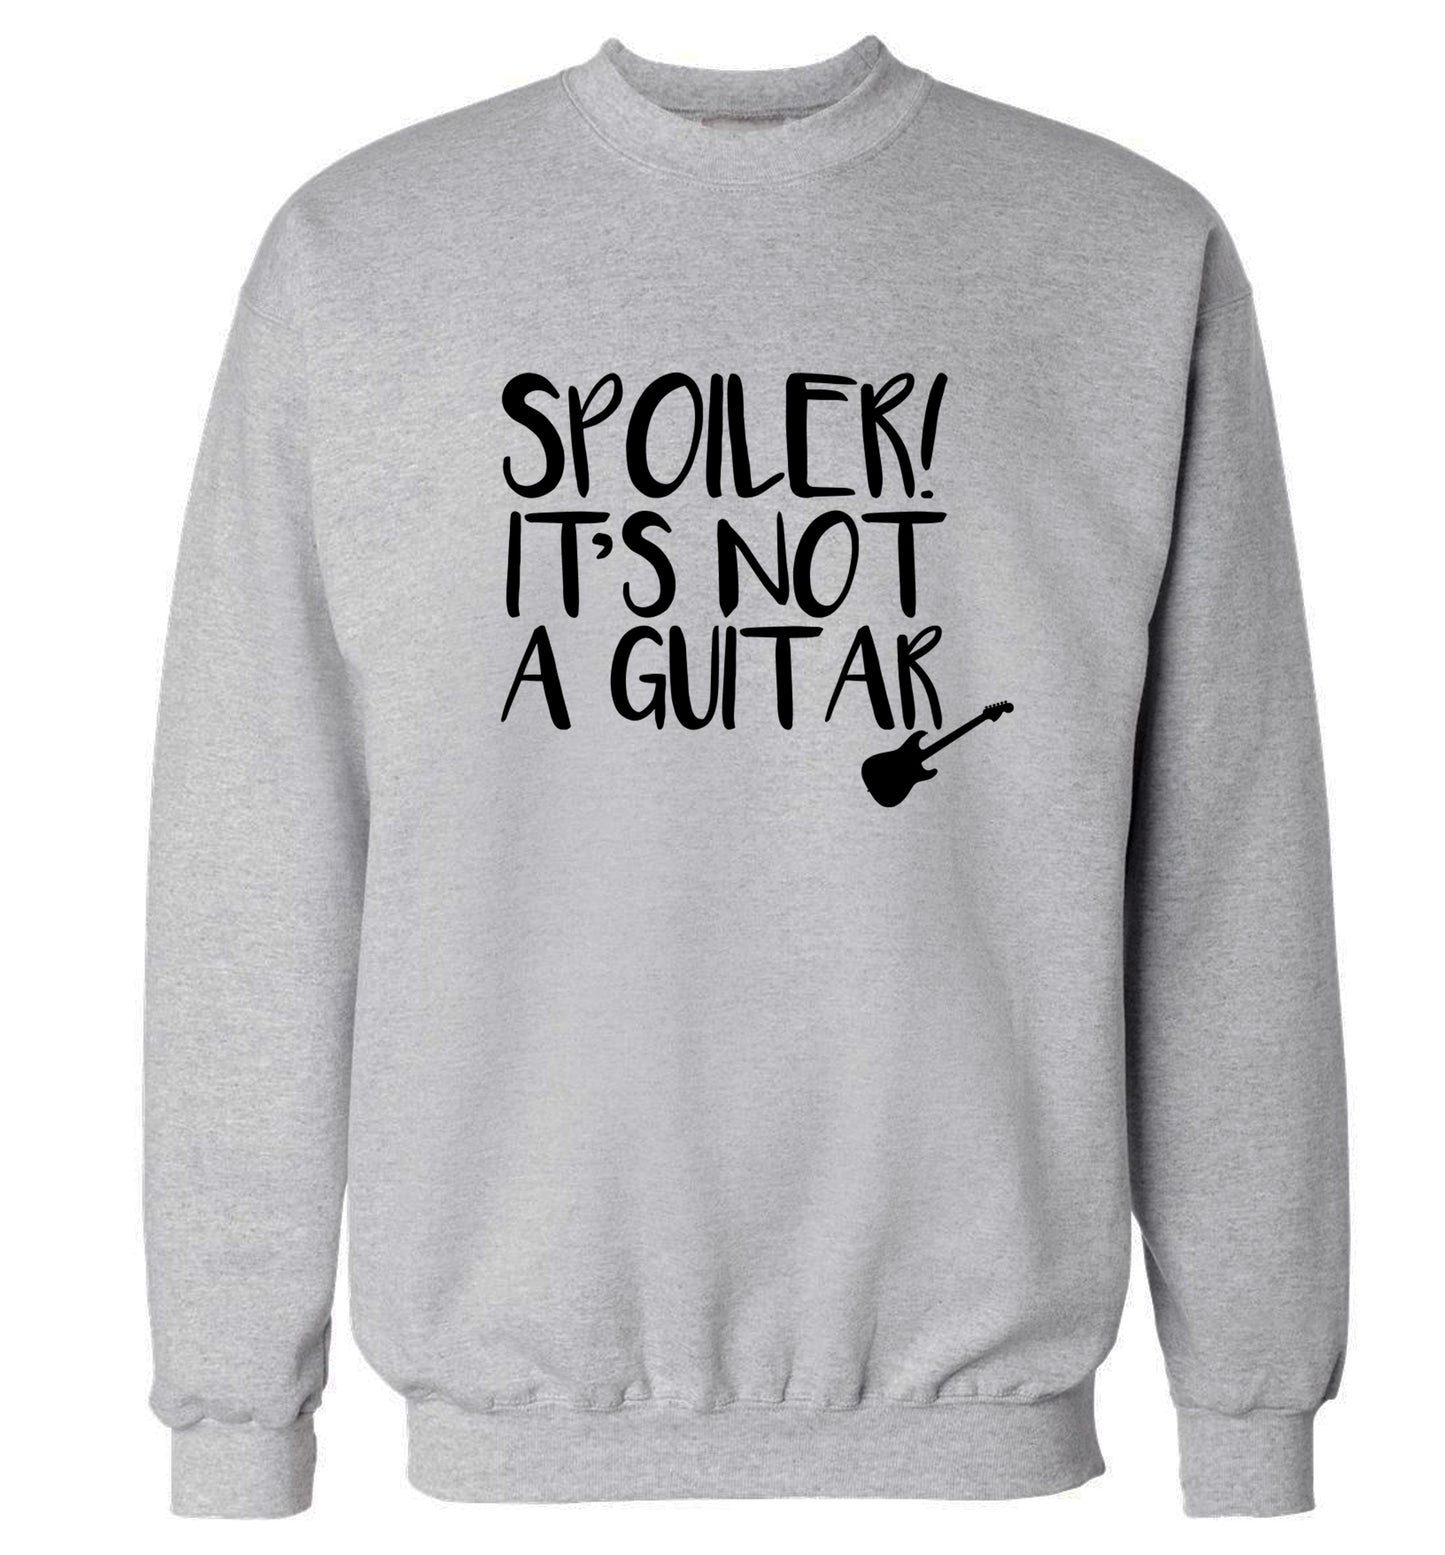 Spoiler it's not a guitar Adult's unisex grey Sweater 2XL